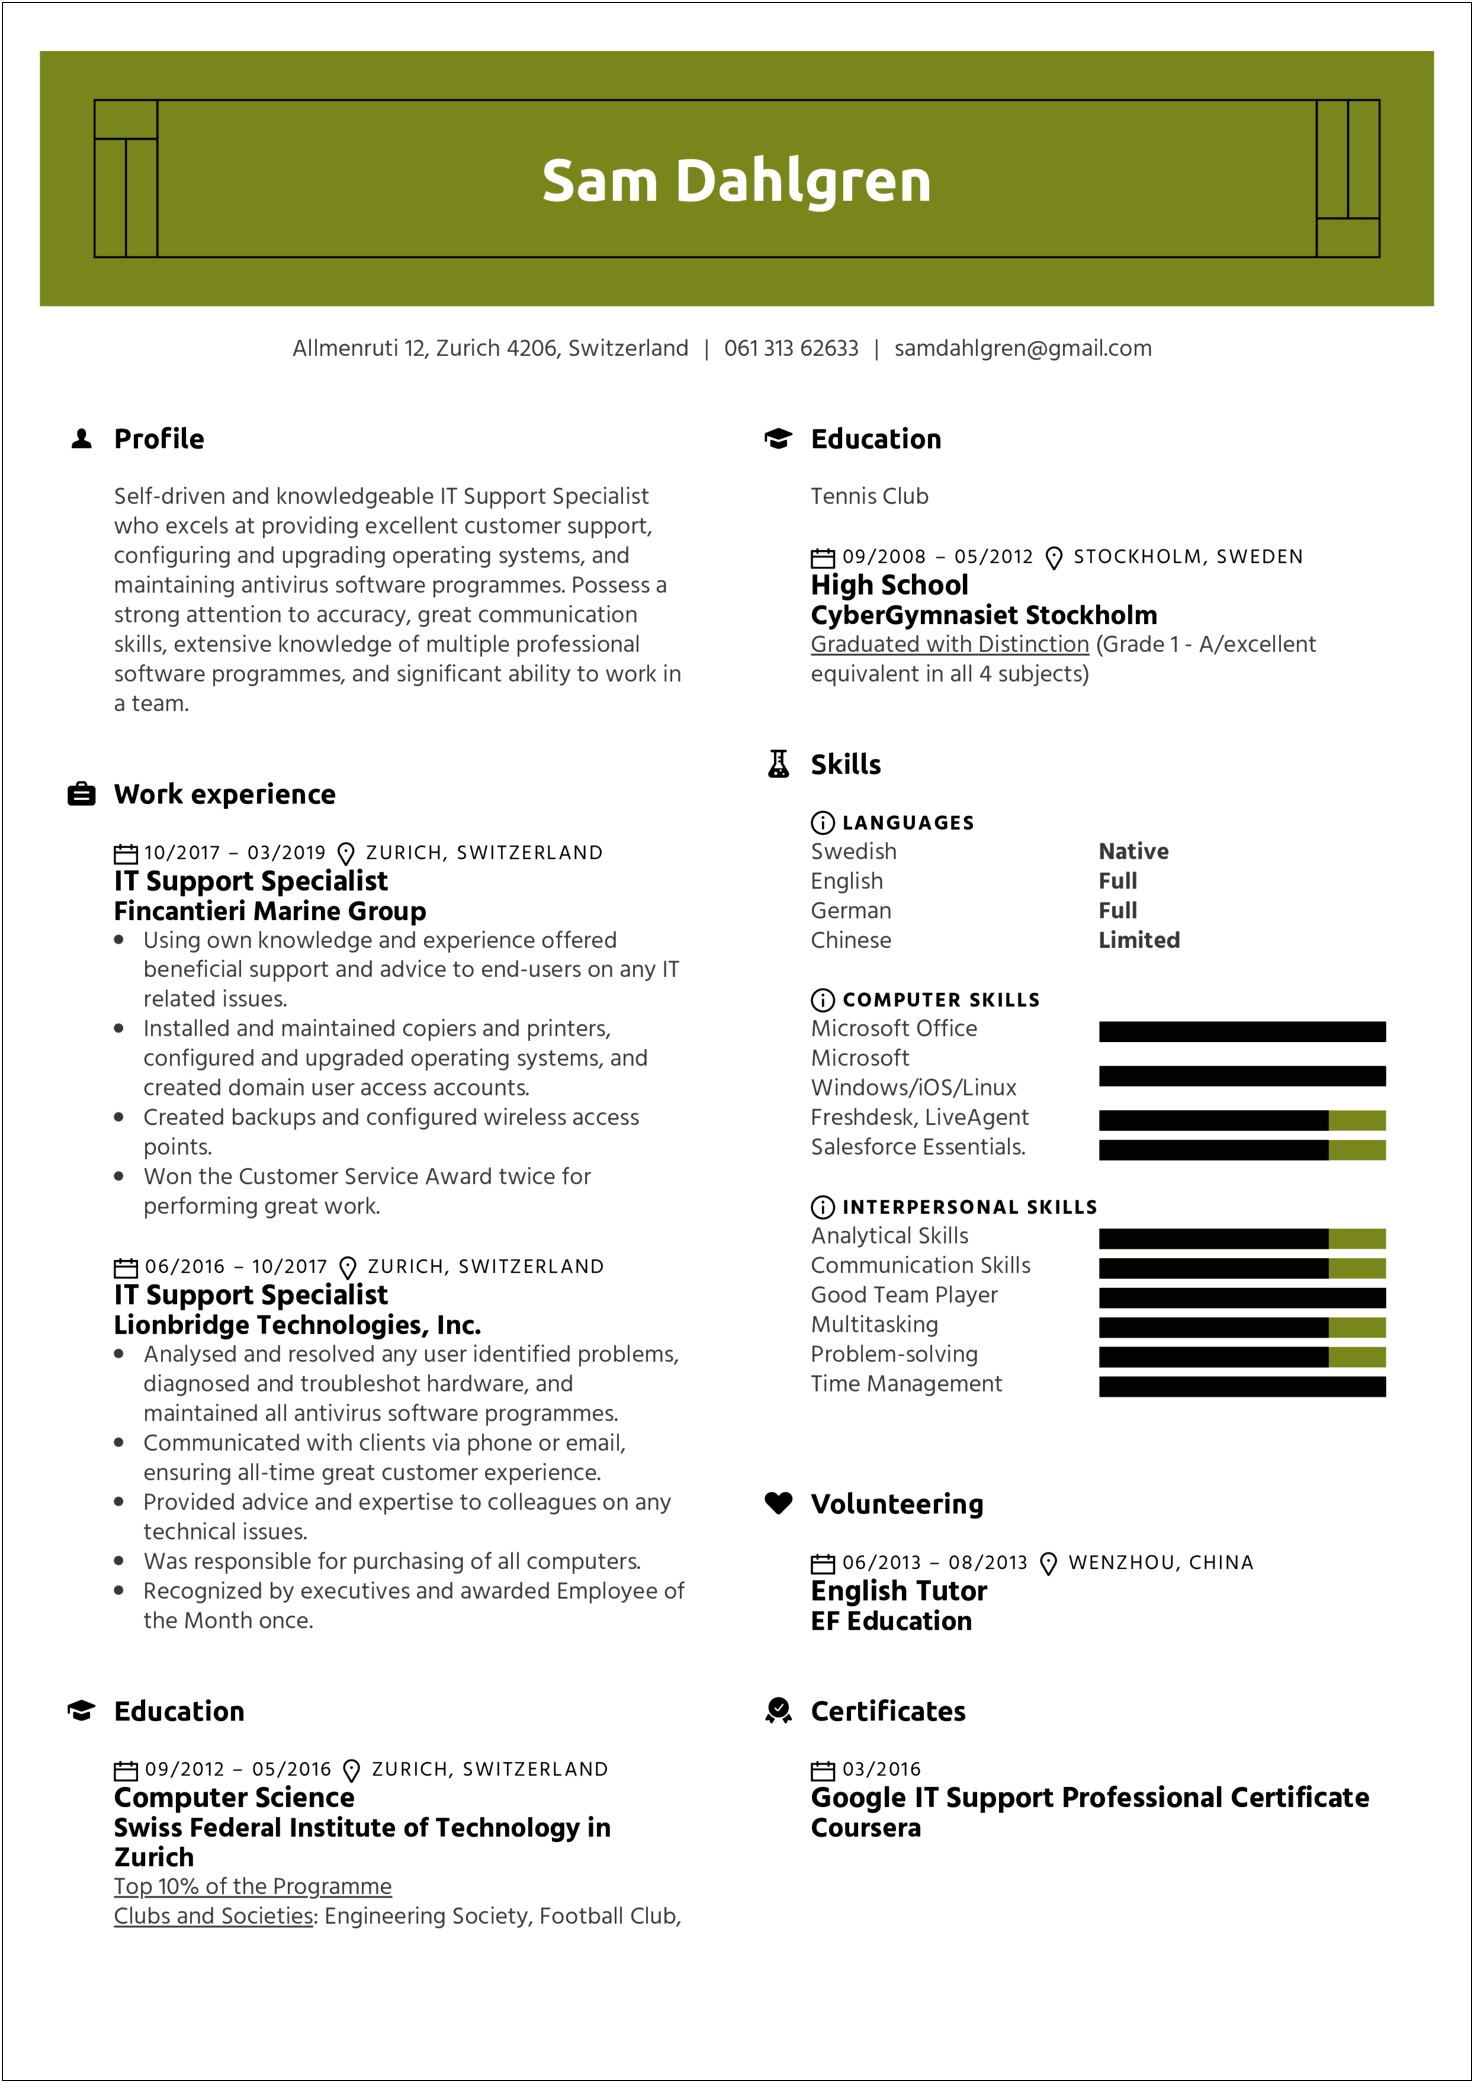 Resume Computer Skills Microsoft Office